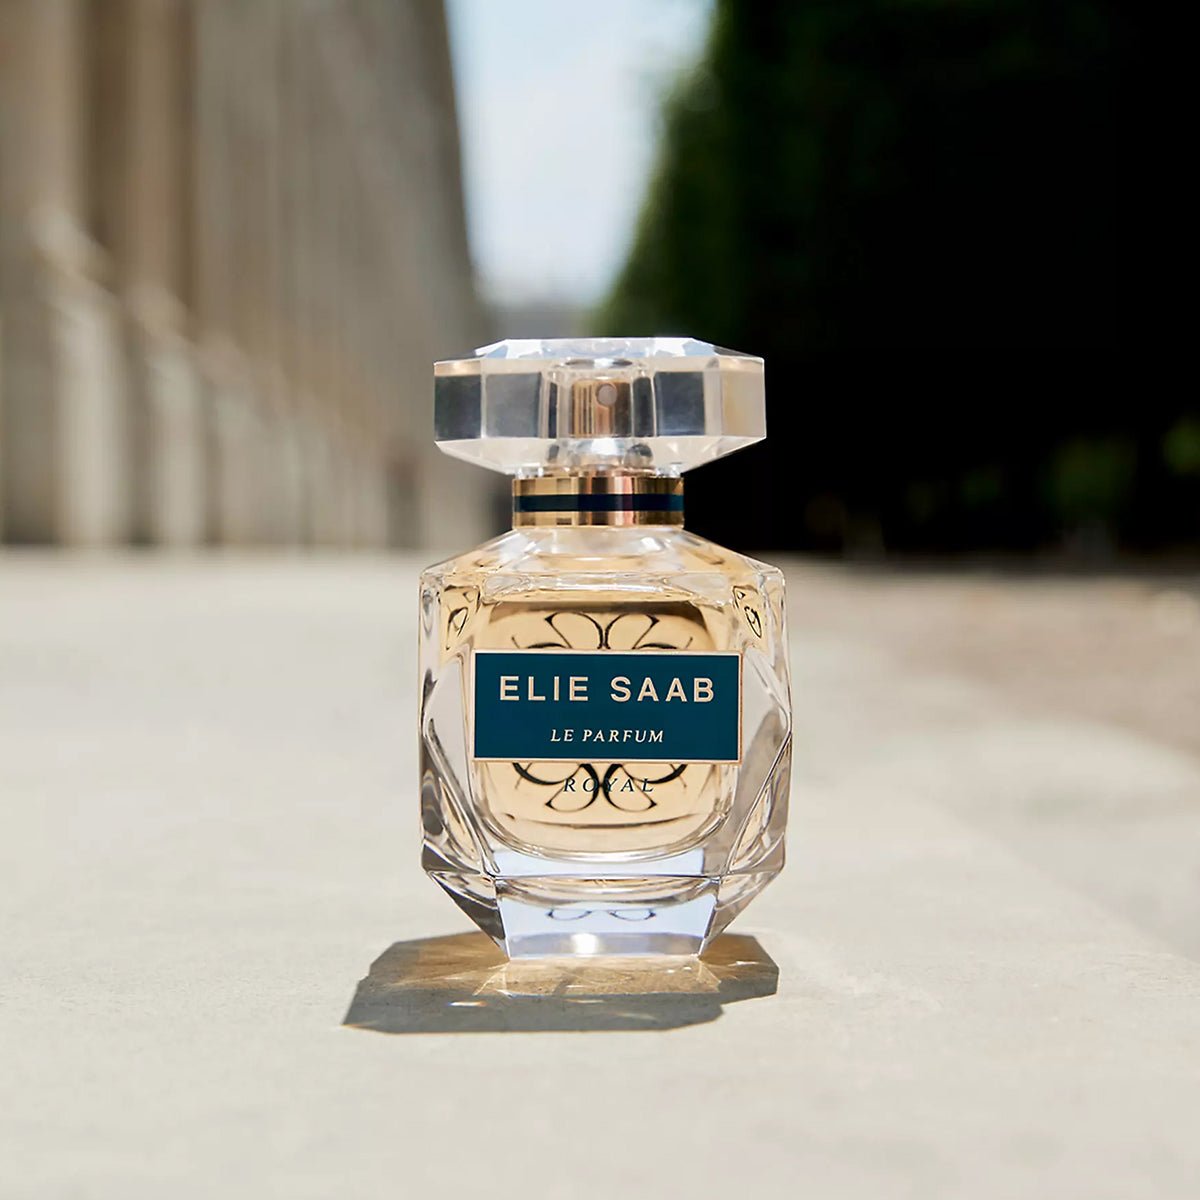 Elie Saab Le Parfum Royal EDP | My Perfume Shop Australia